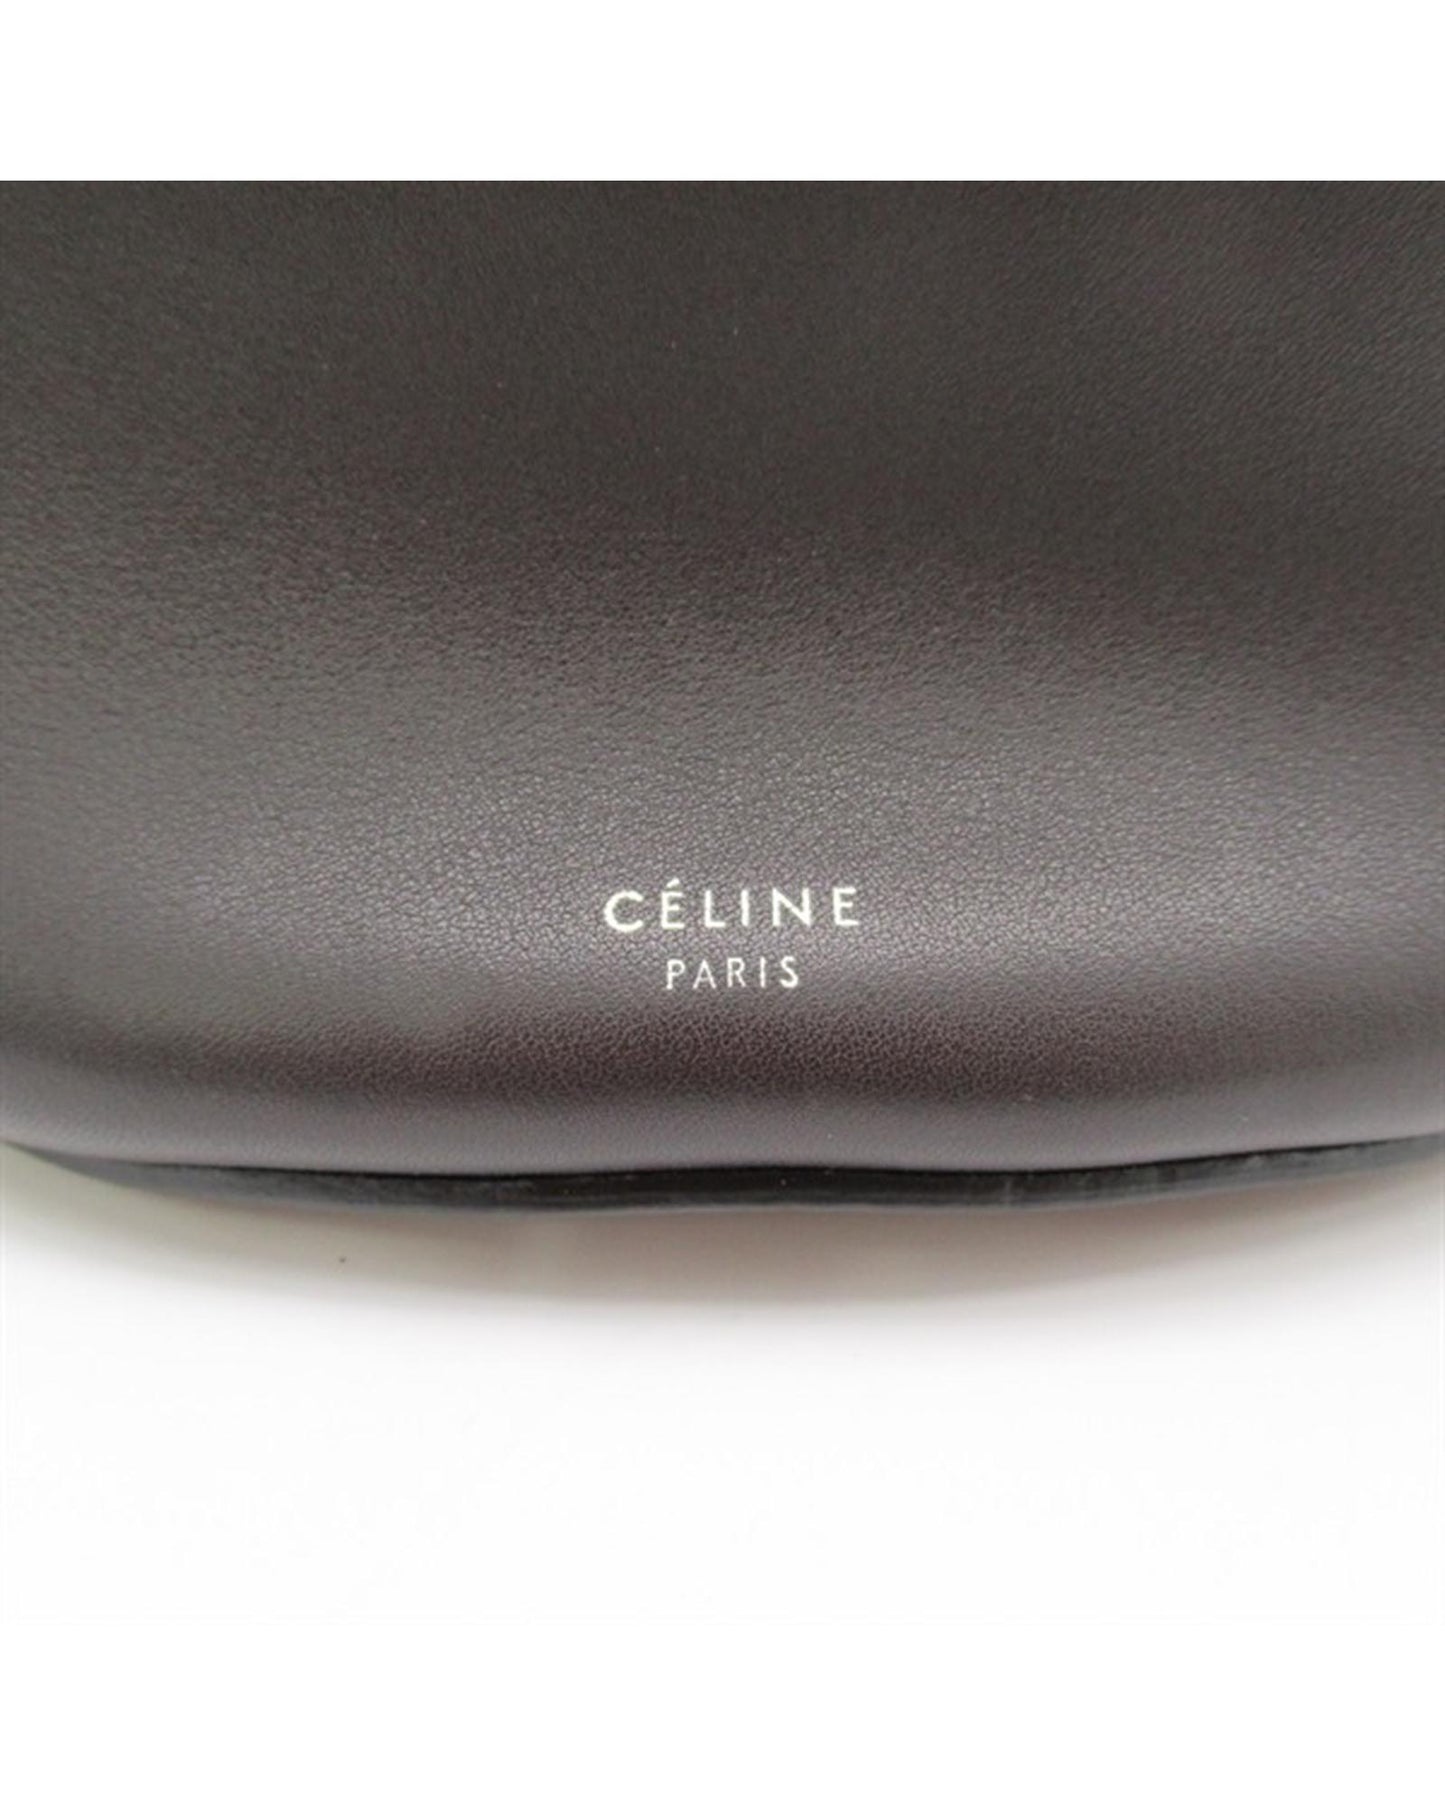 Celine Women's Excellent Condition Leather Bucket Bag in Brown